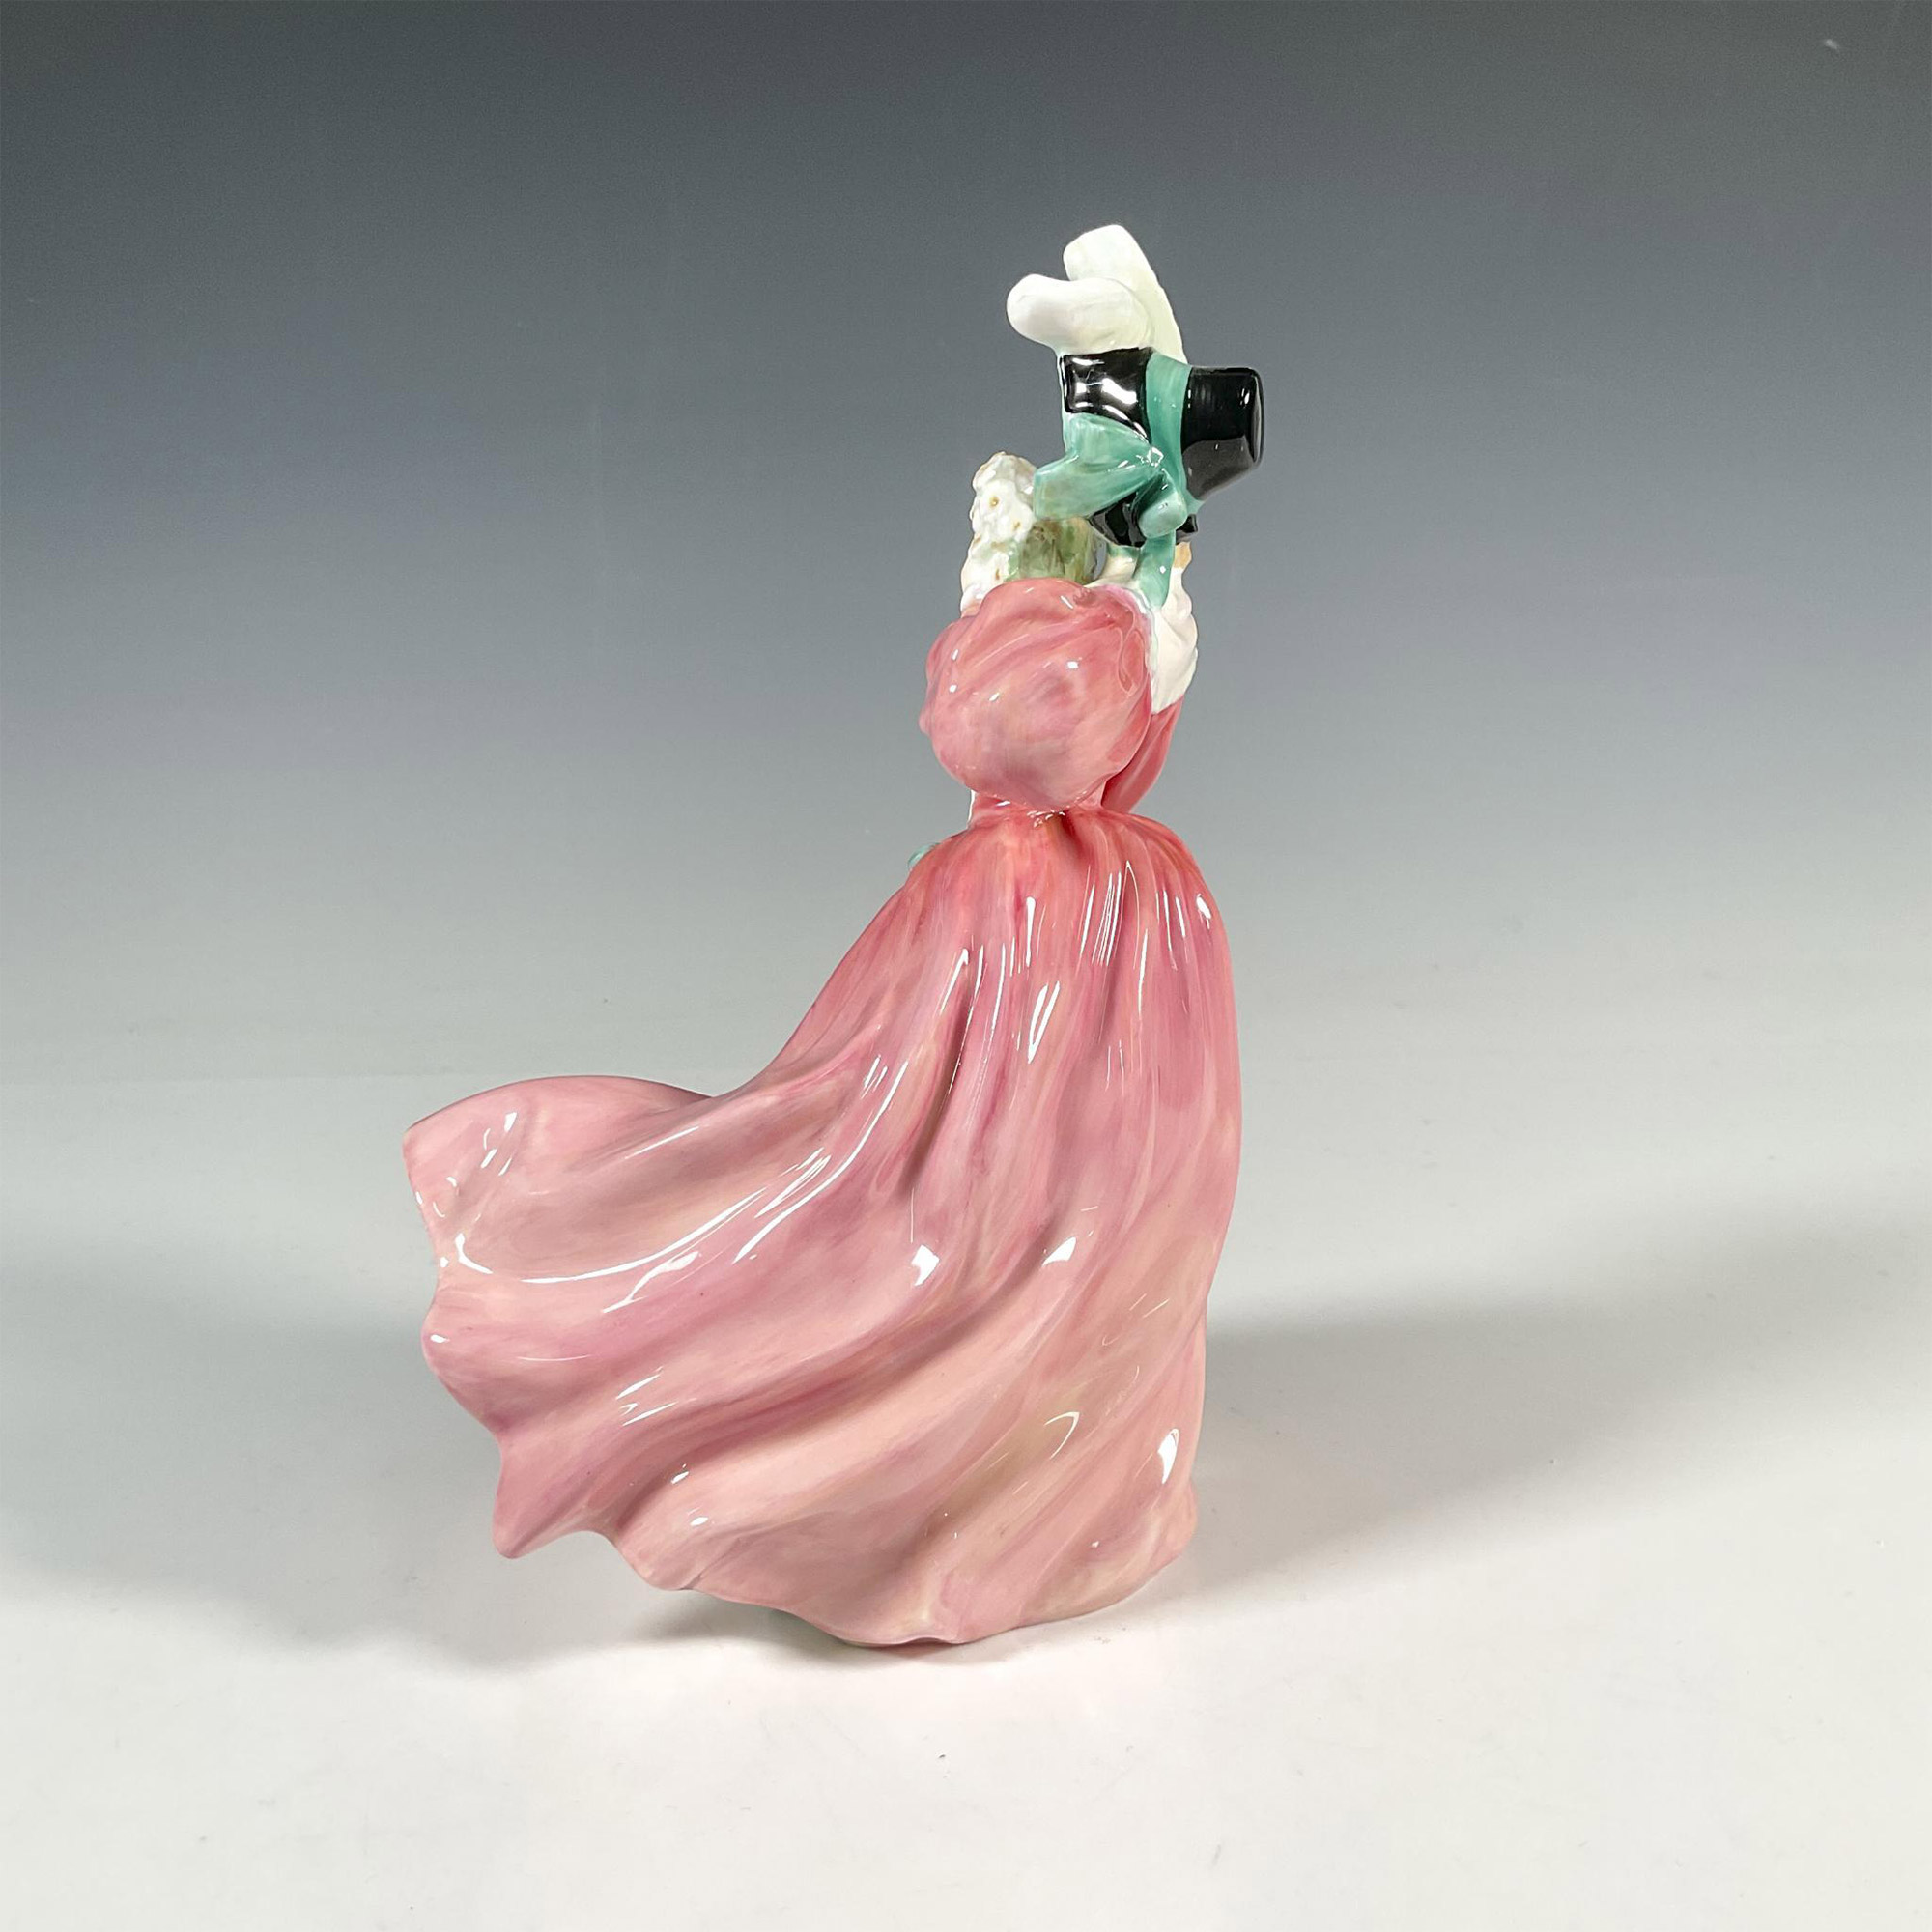 Marguerite HN1928 - Royal Doulton Figurine - Image 4 of 5